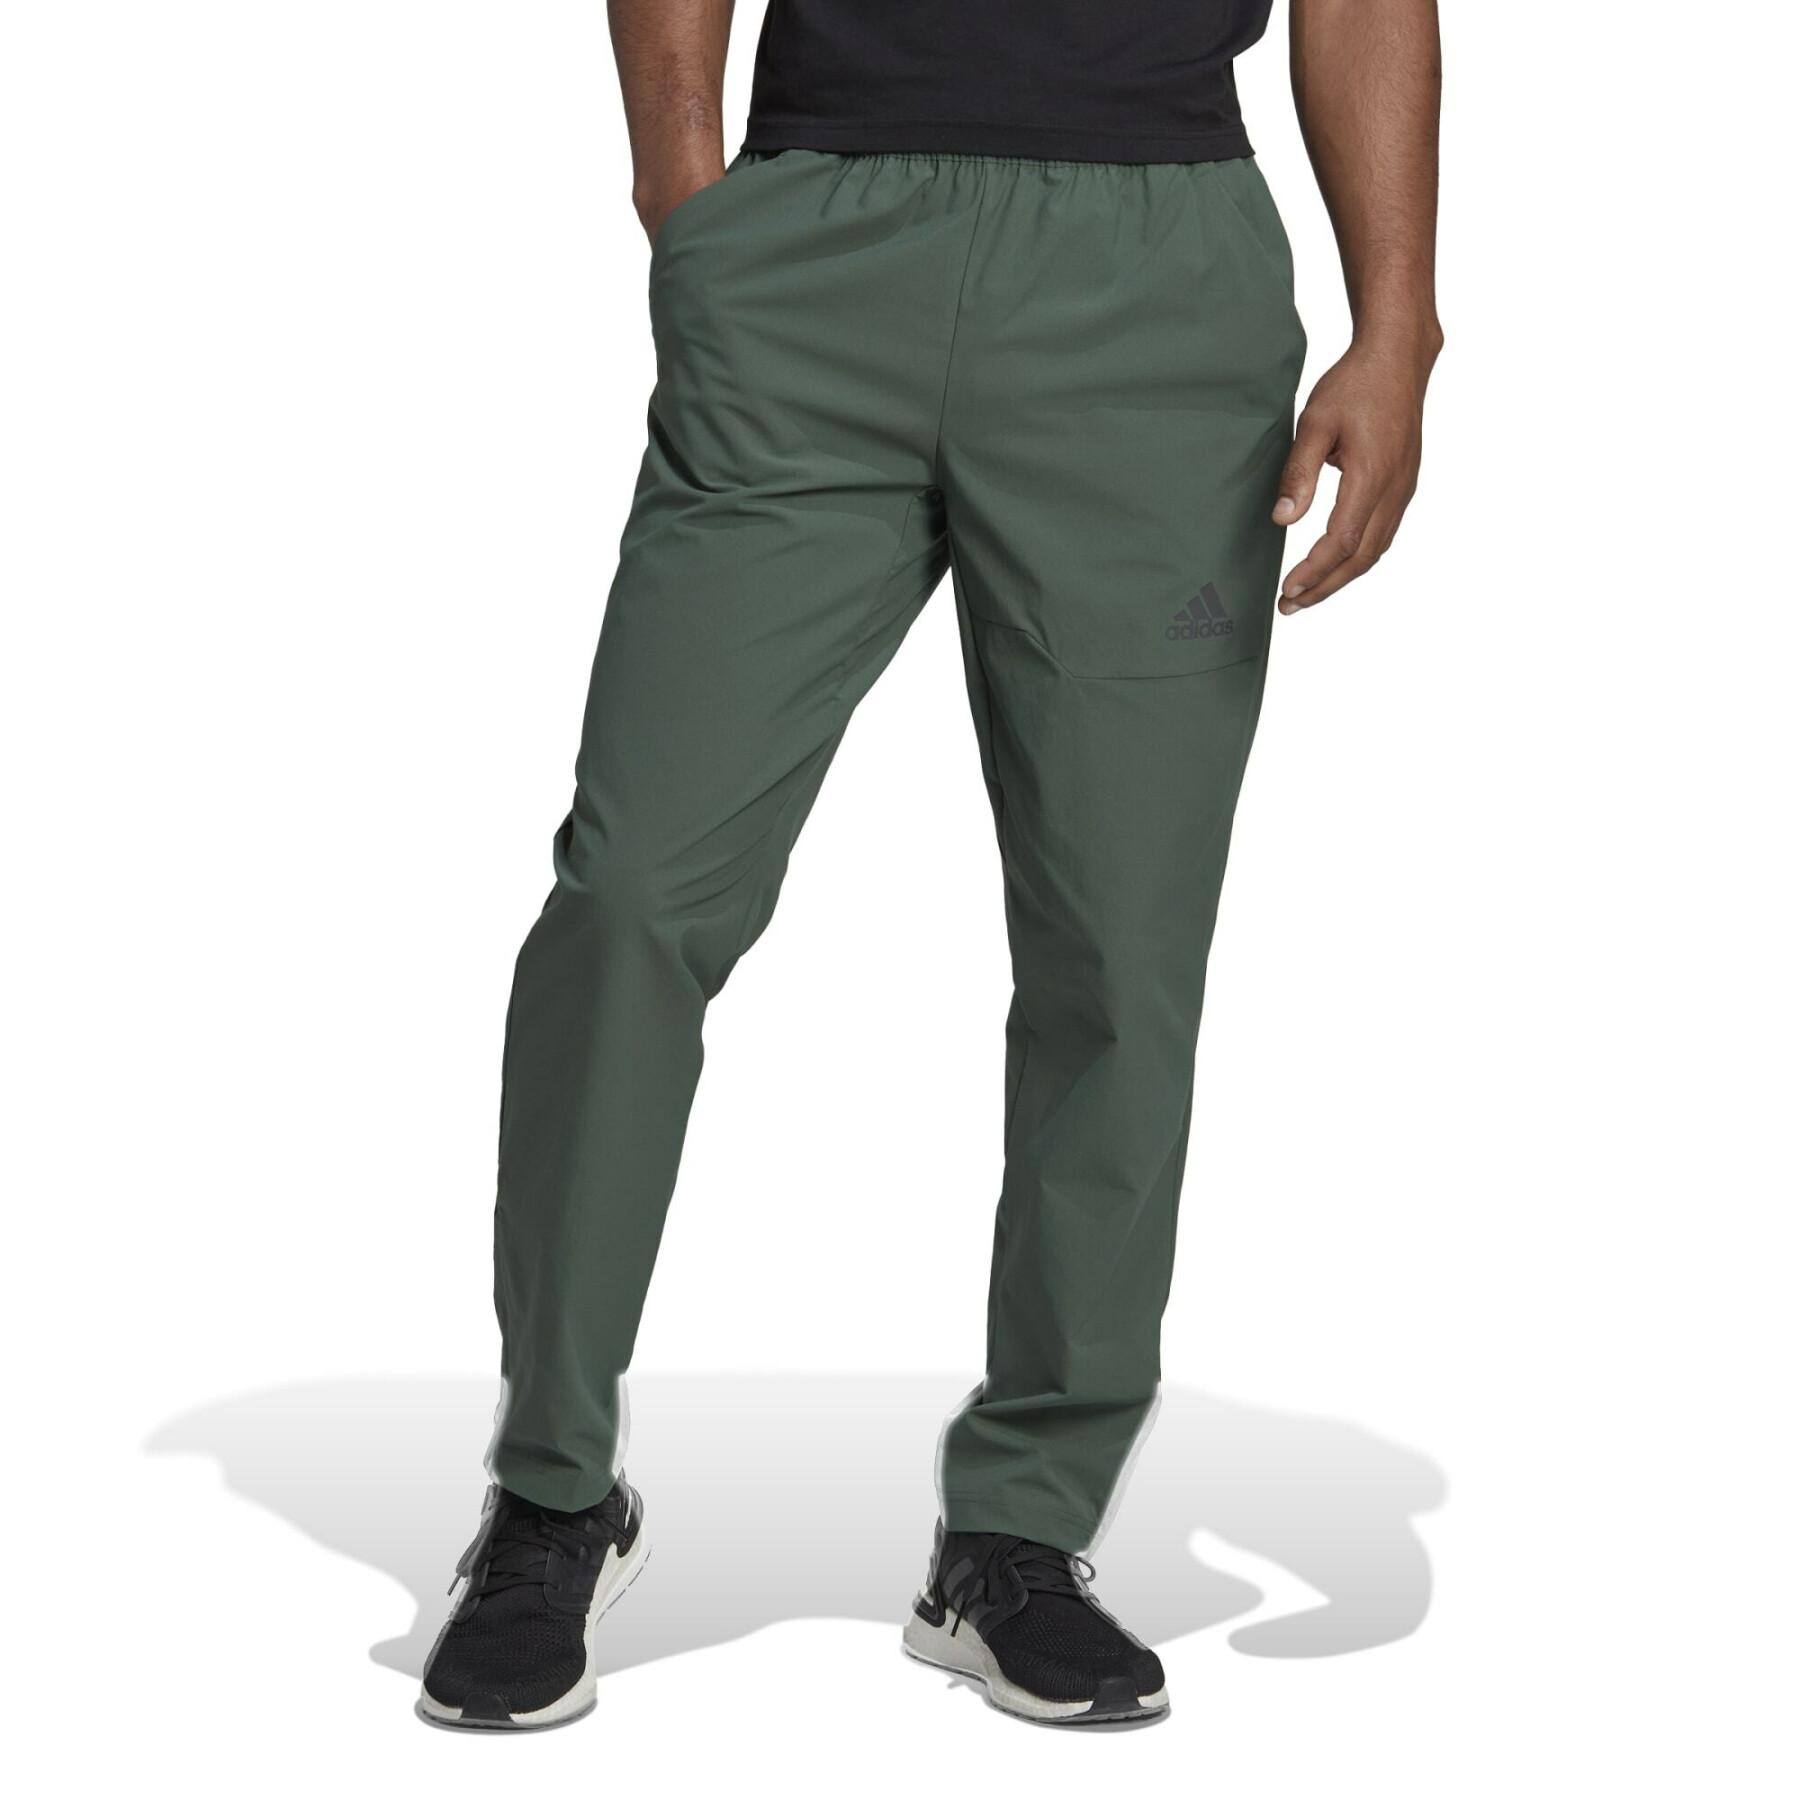 Woven jogging suit adidas Essentials Hero to Halo